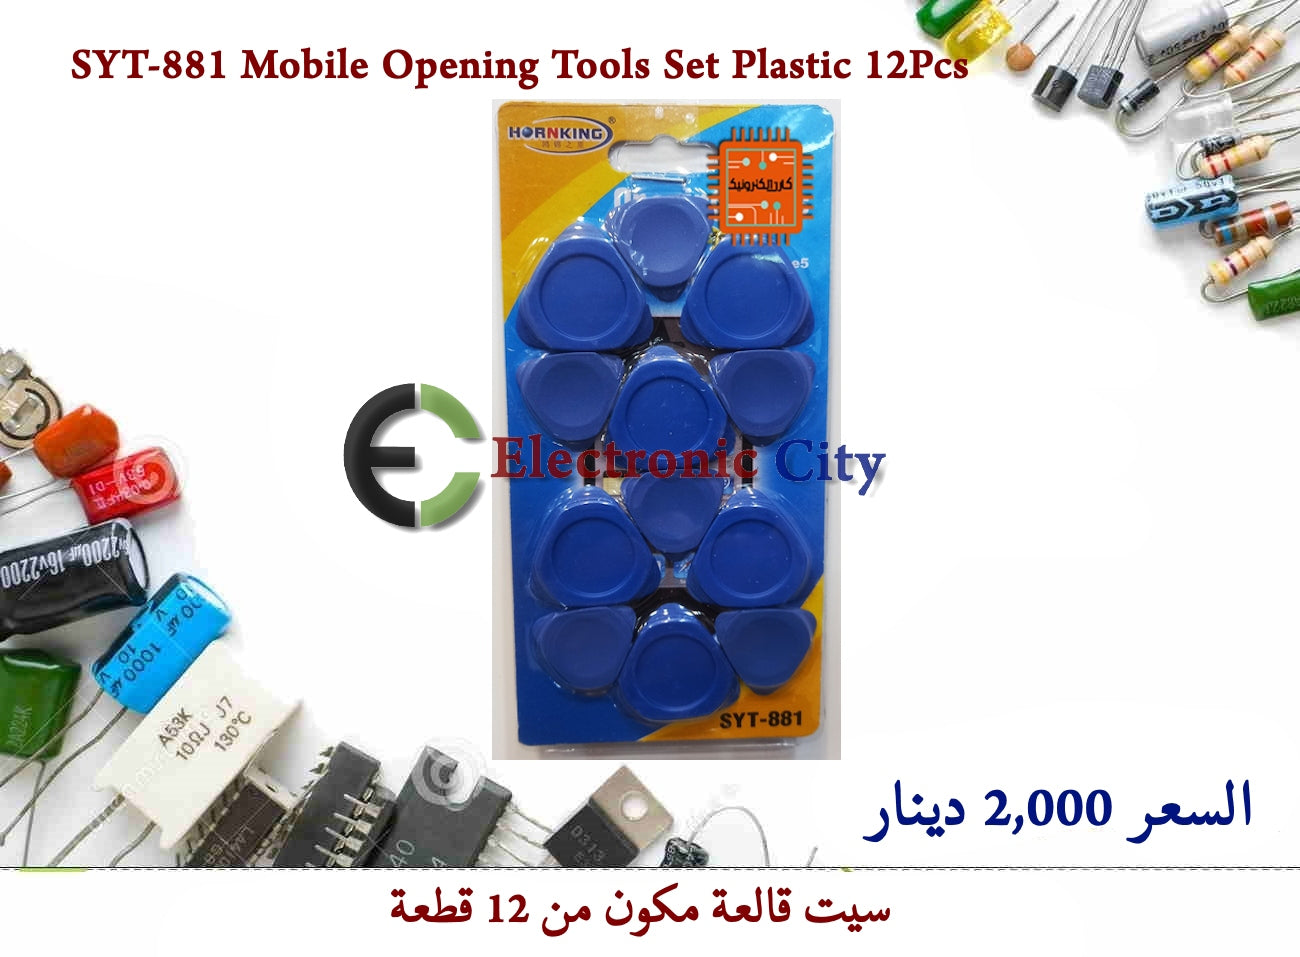 SYT-881 Mobile Opening Tools Set Plastic 12Pcs